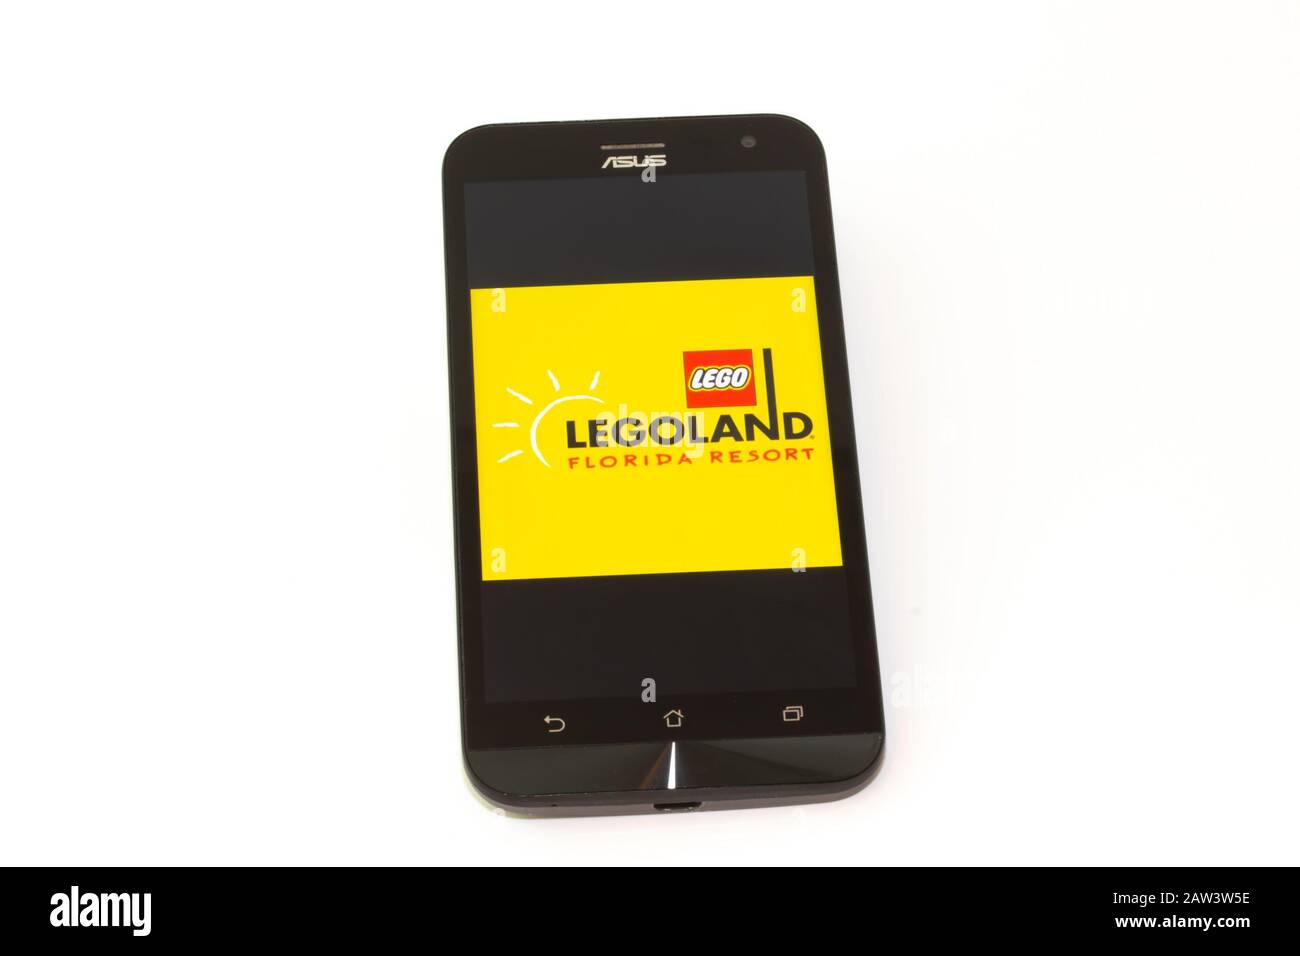 Kouvola, Finlande - 23 janvier 2020: Legoland Florida Resort app logo sur l'écran du smartphone Asus Banque D'Images